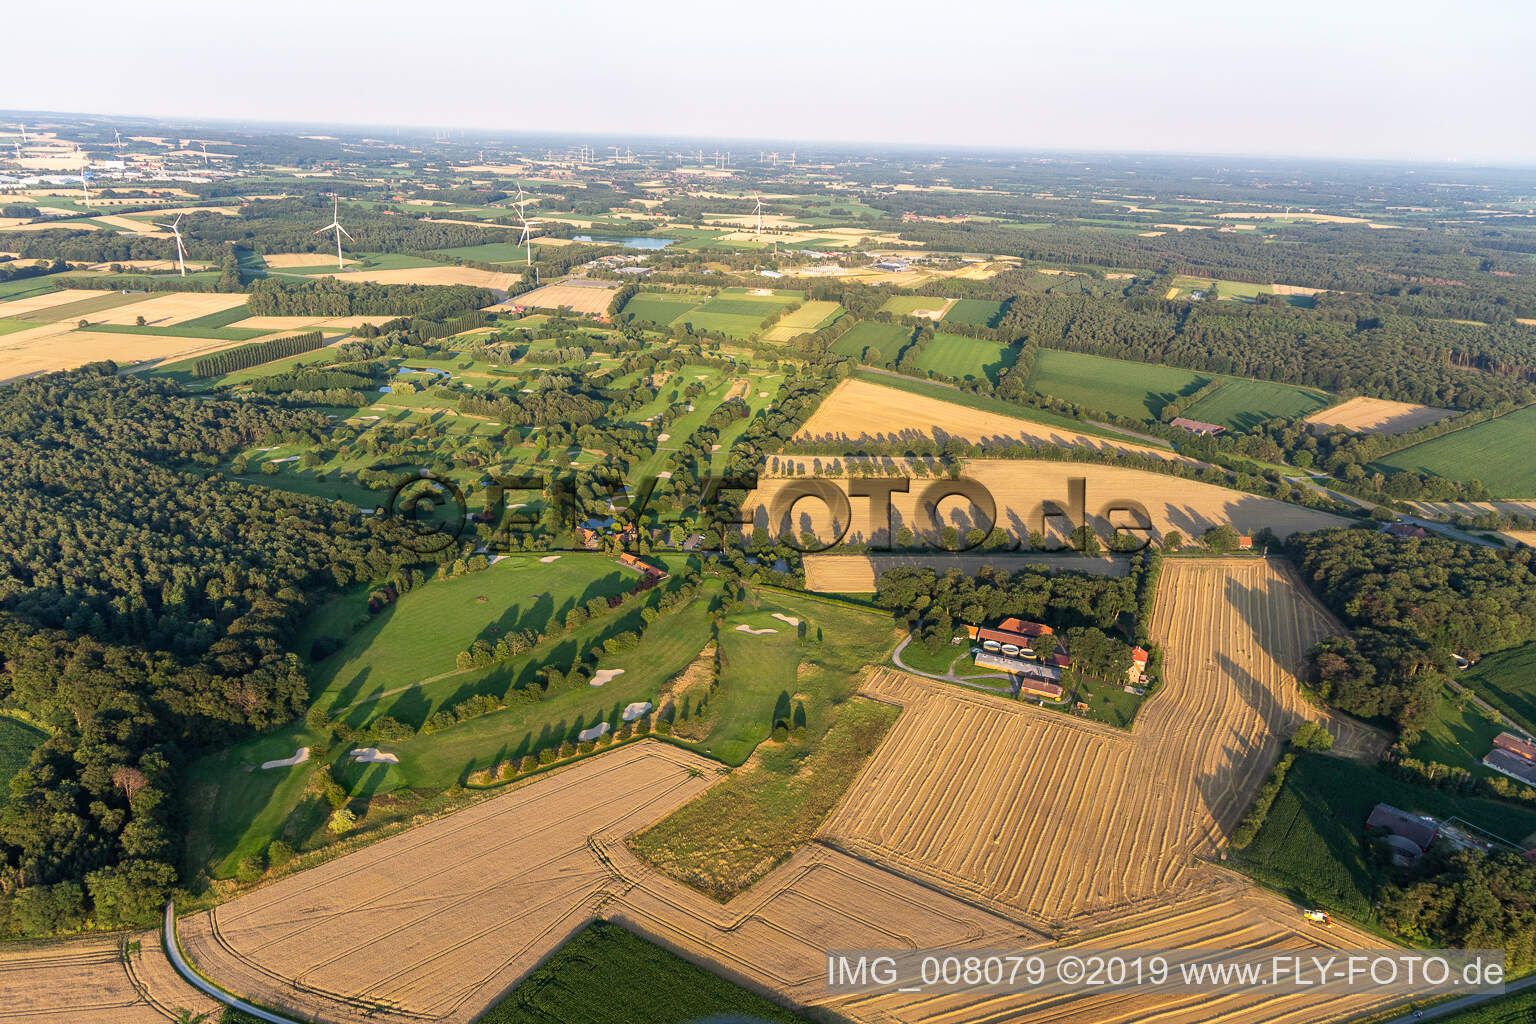 Golf and Country Club Coesfeld eV in Coesfeld in the state North Rhine-Westphalia, Germany